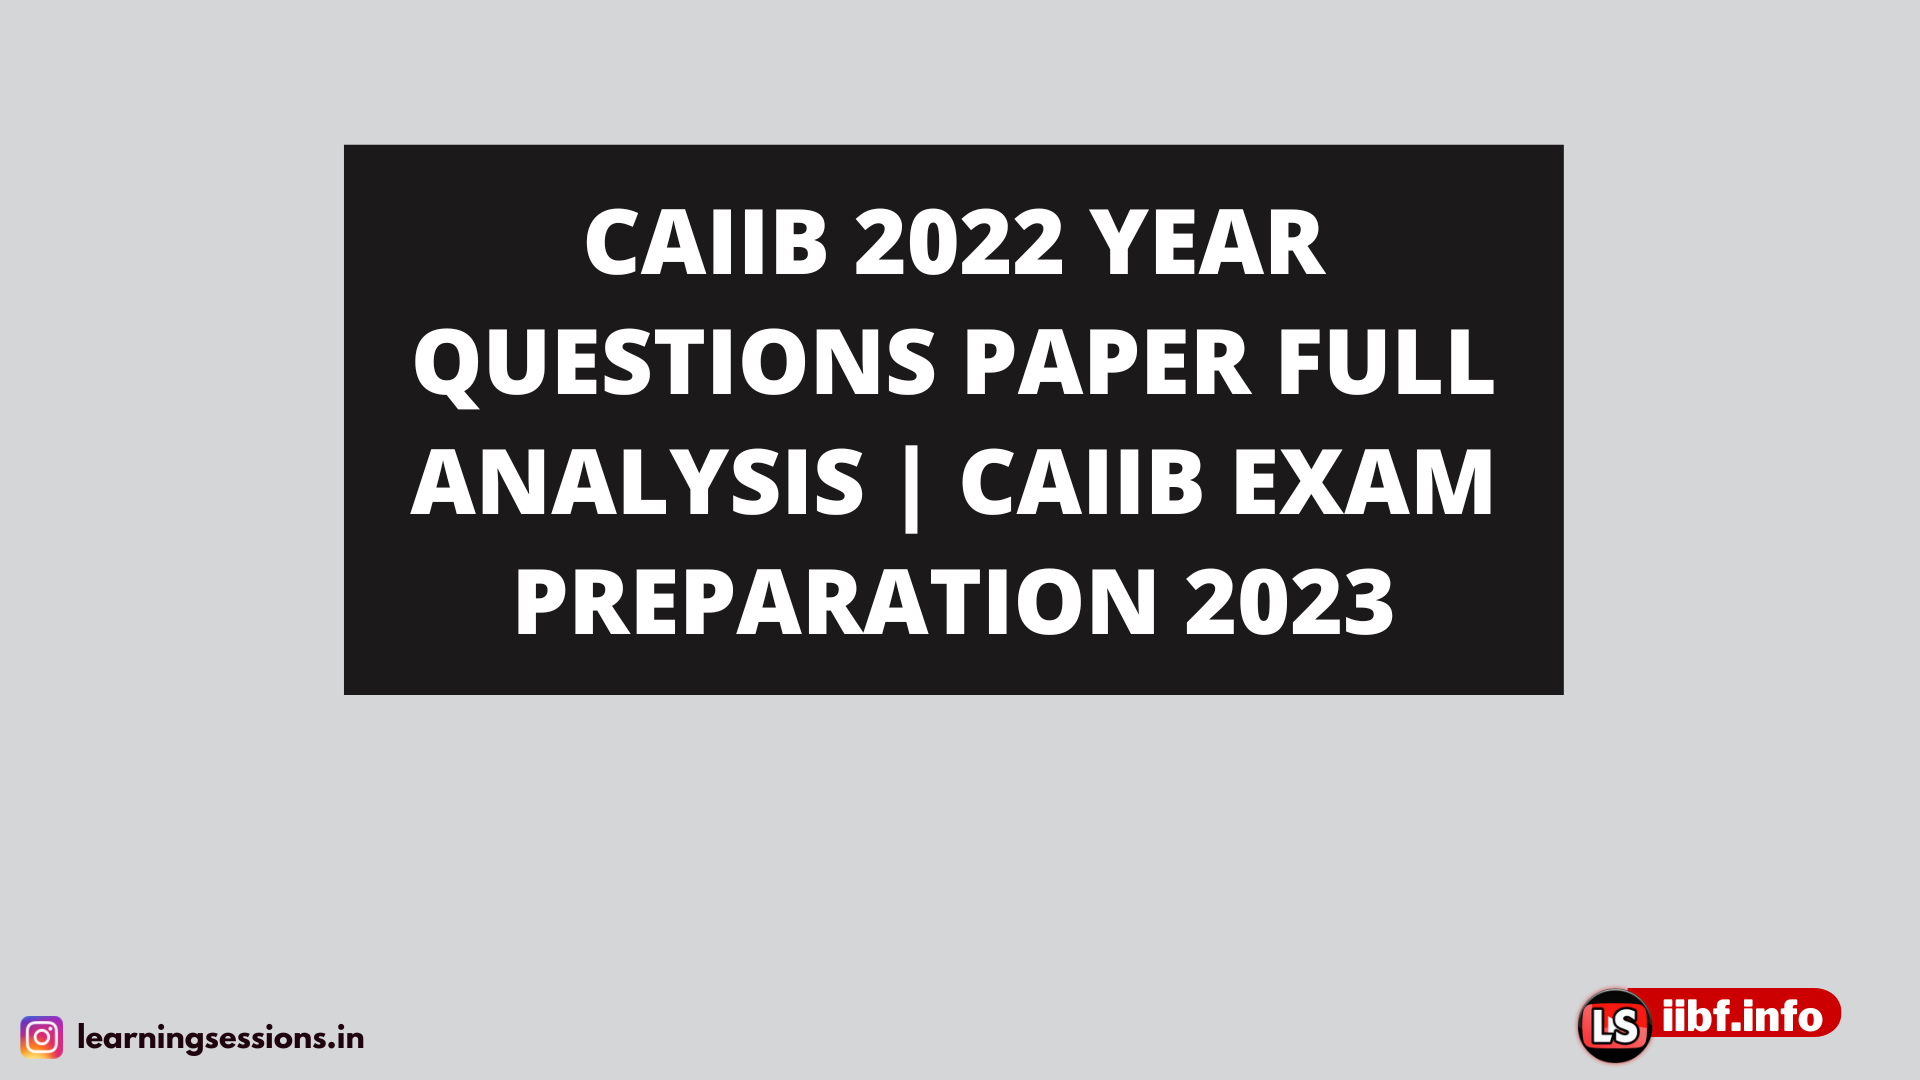 CAIIB 2022 YEAR QUESTIONS PAPER FULL ANALYSIS | CAIIB EXAM PREPARATION 2023